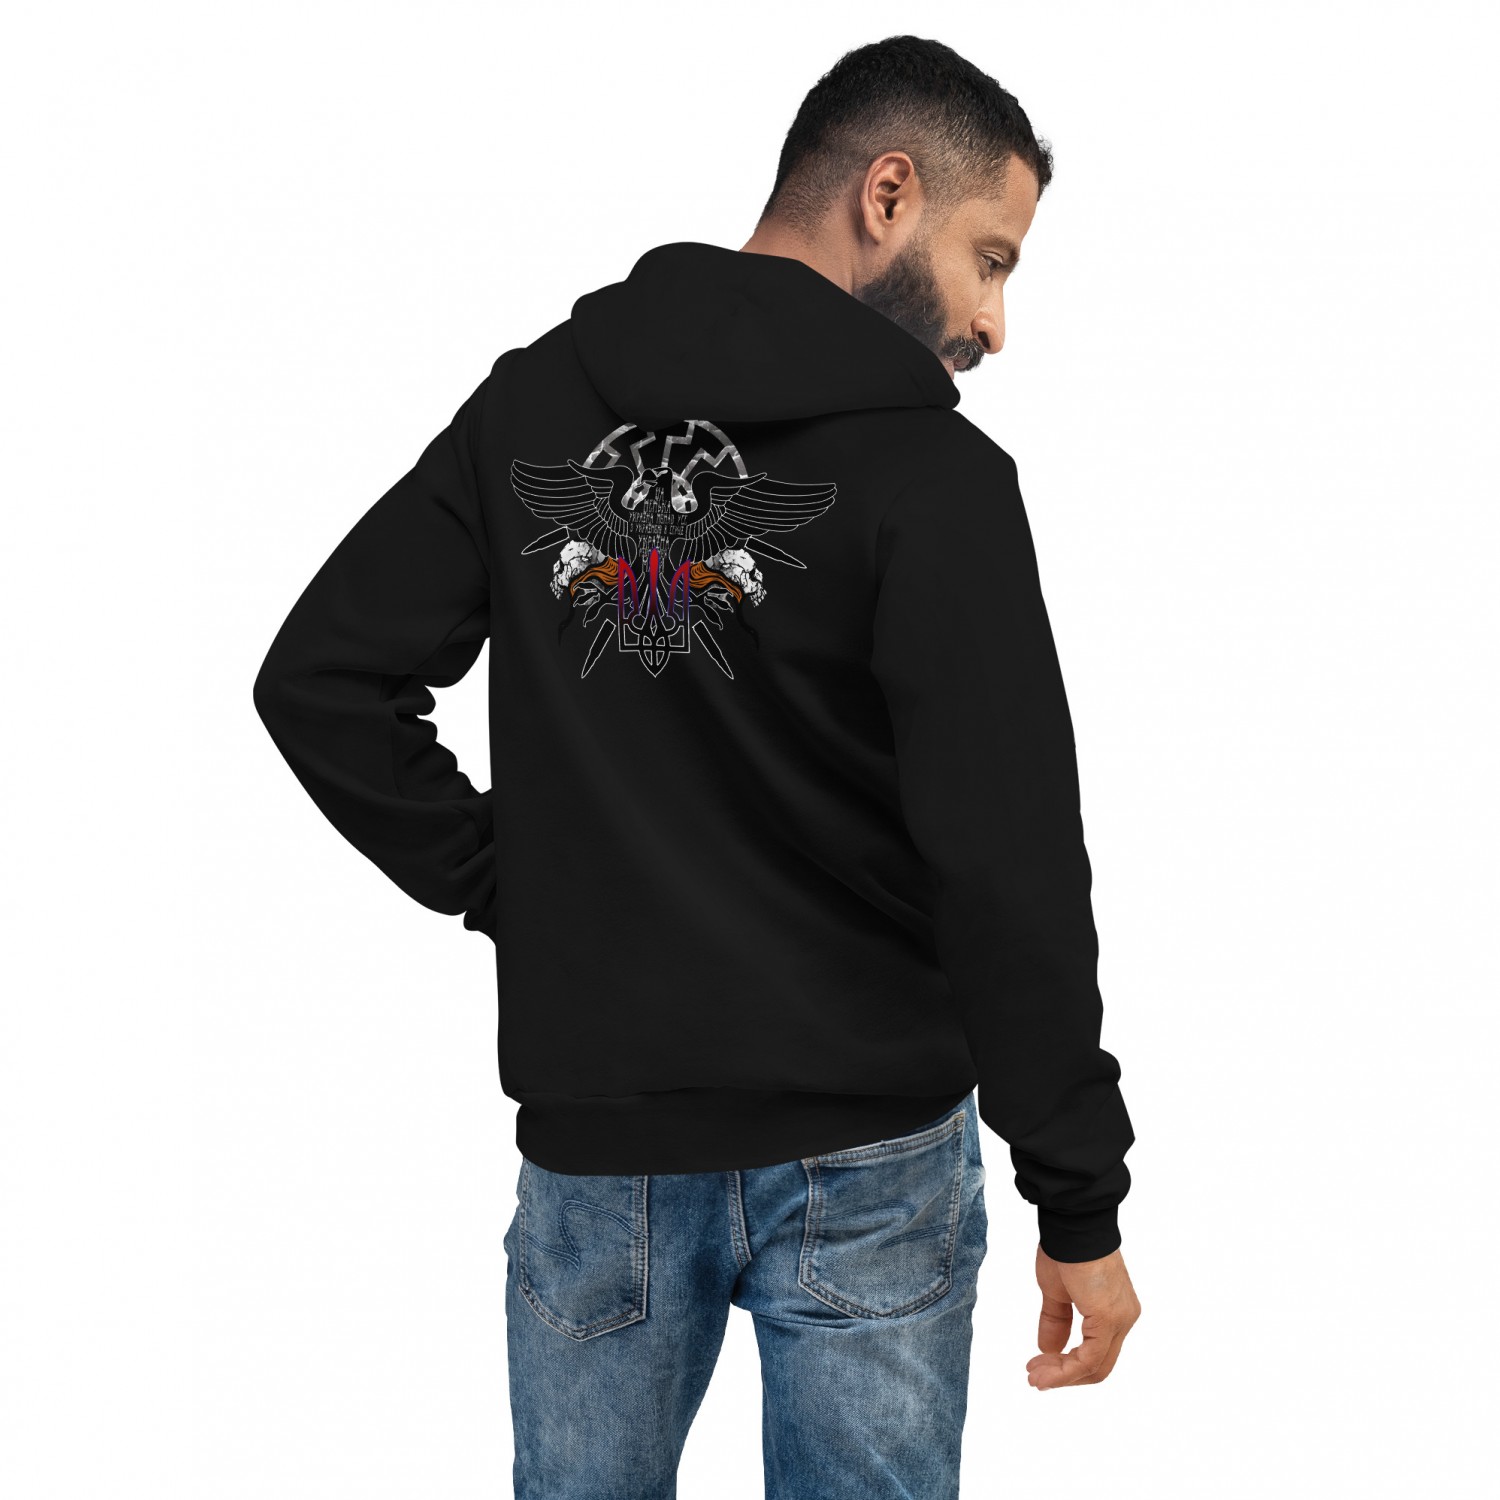 Buy a hoodie with a "Zapekli" pattern